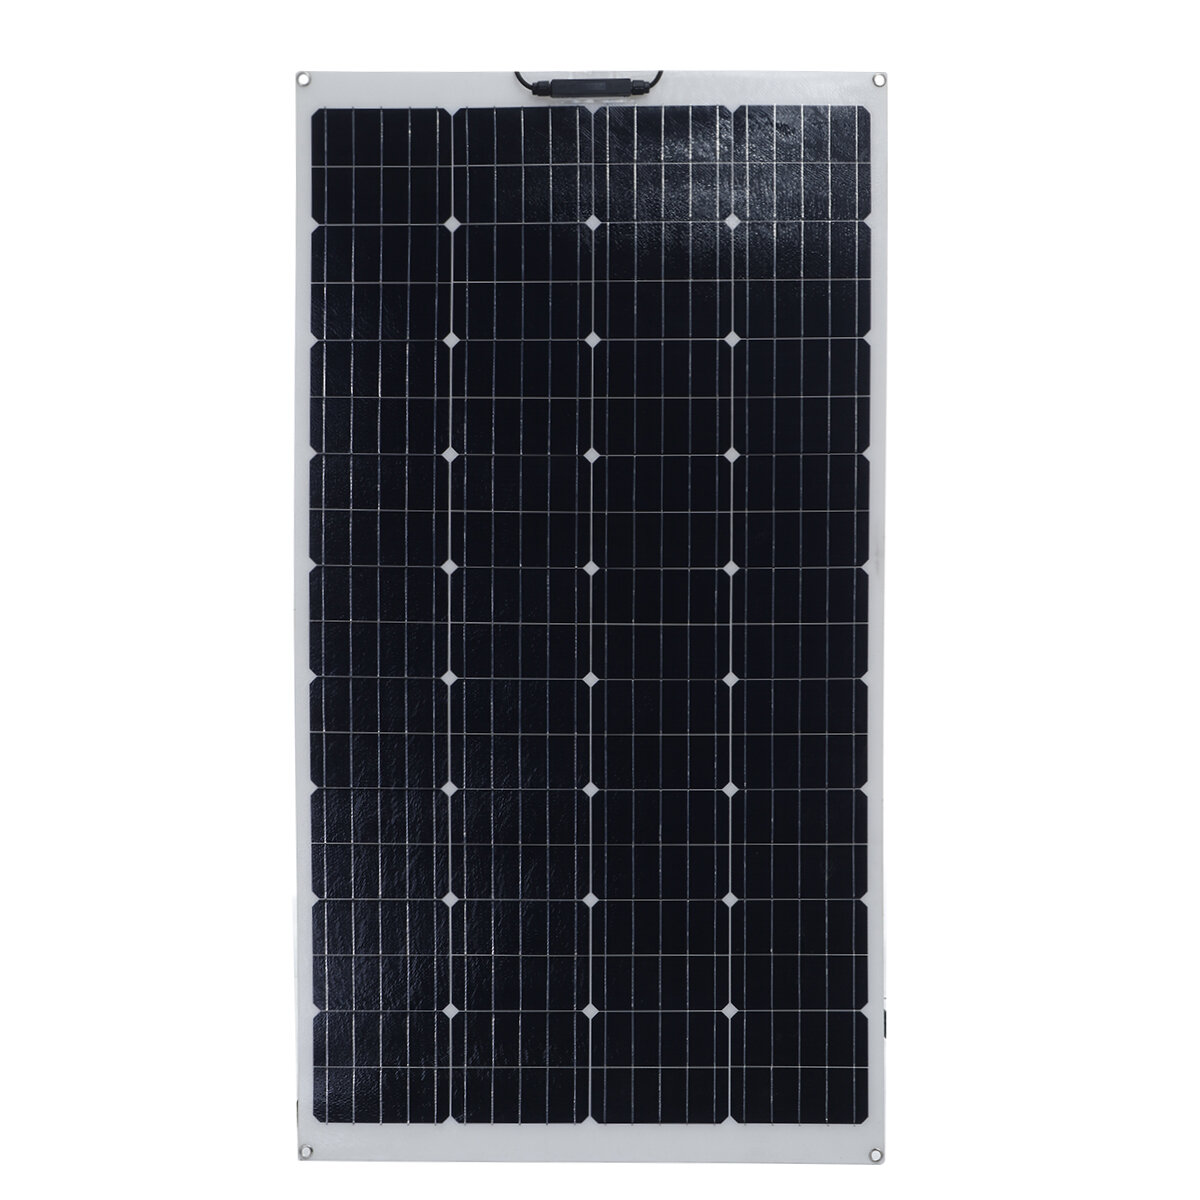 

18V 150W ETFE Sunpower Flexible Solar Panel Monocrystalline Silicon Laminated Solar Panel 1240*670mm